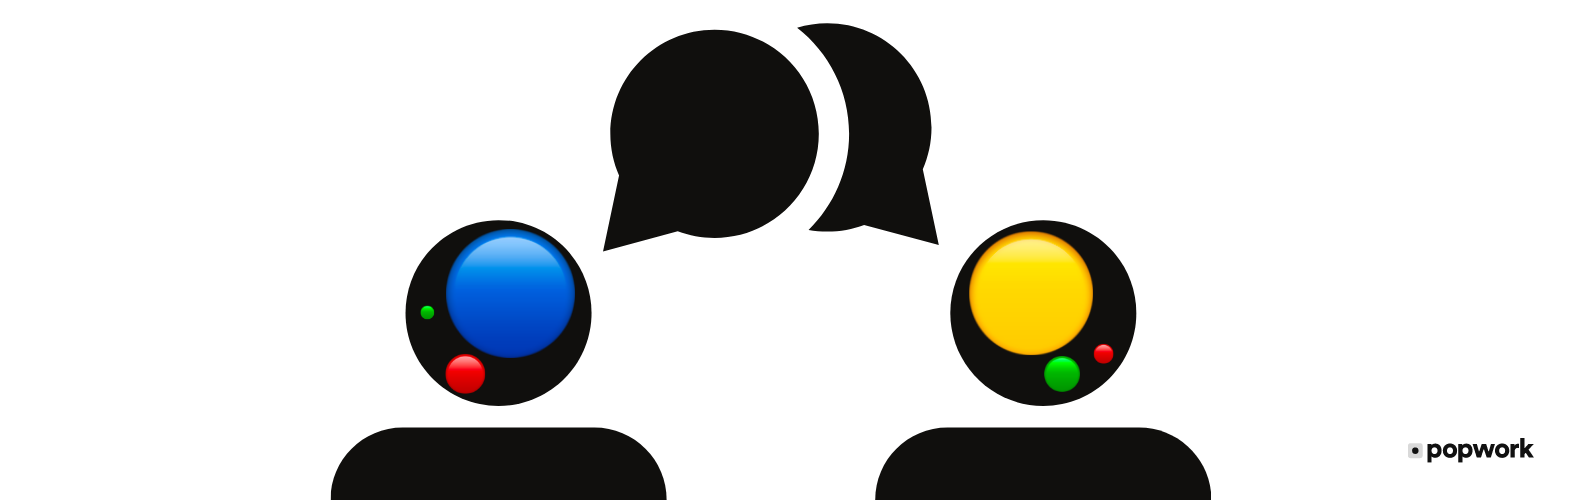 Profil Conforme (bleu) s'adressant à un profil Influent (jaune) ) - Popwork